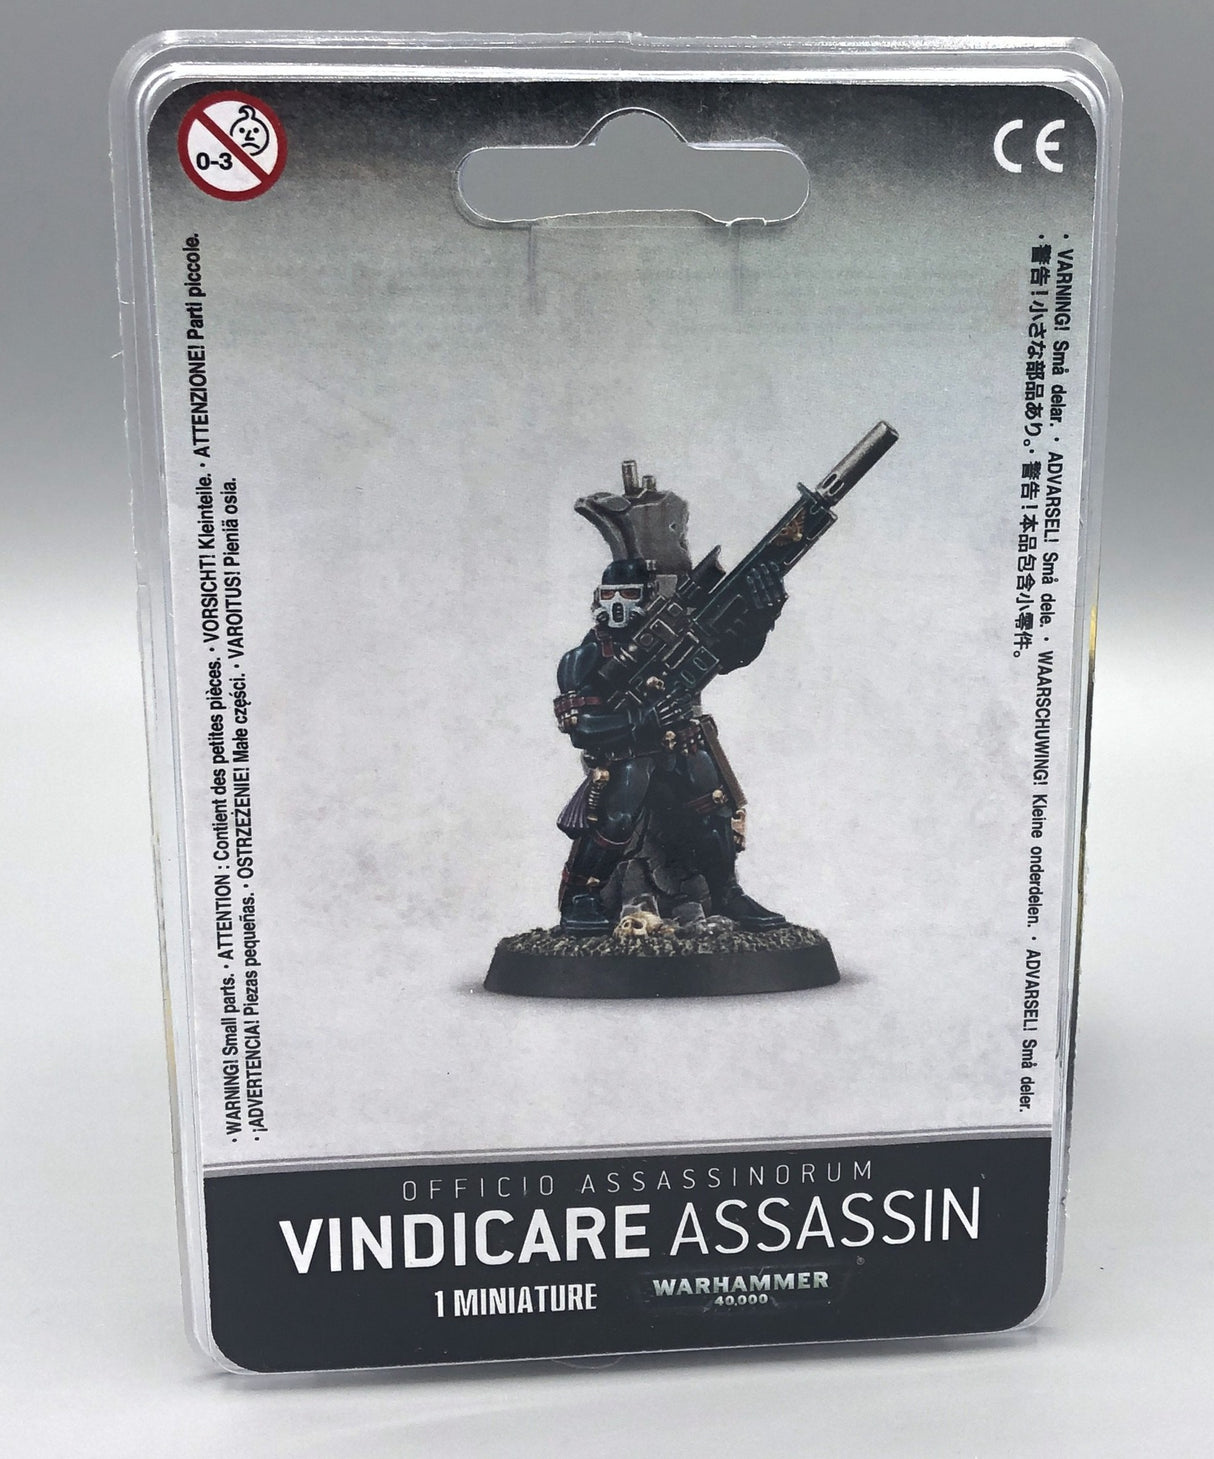 Officio Assassinorum: Vindicare Assassin